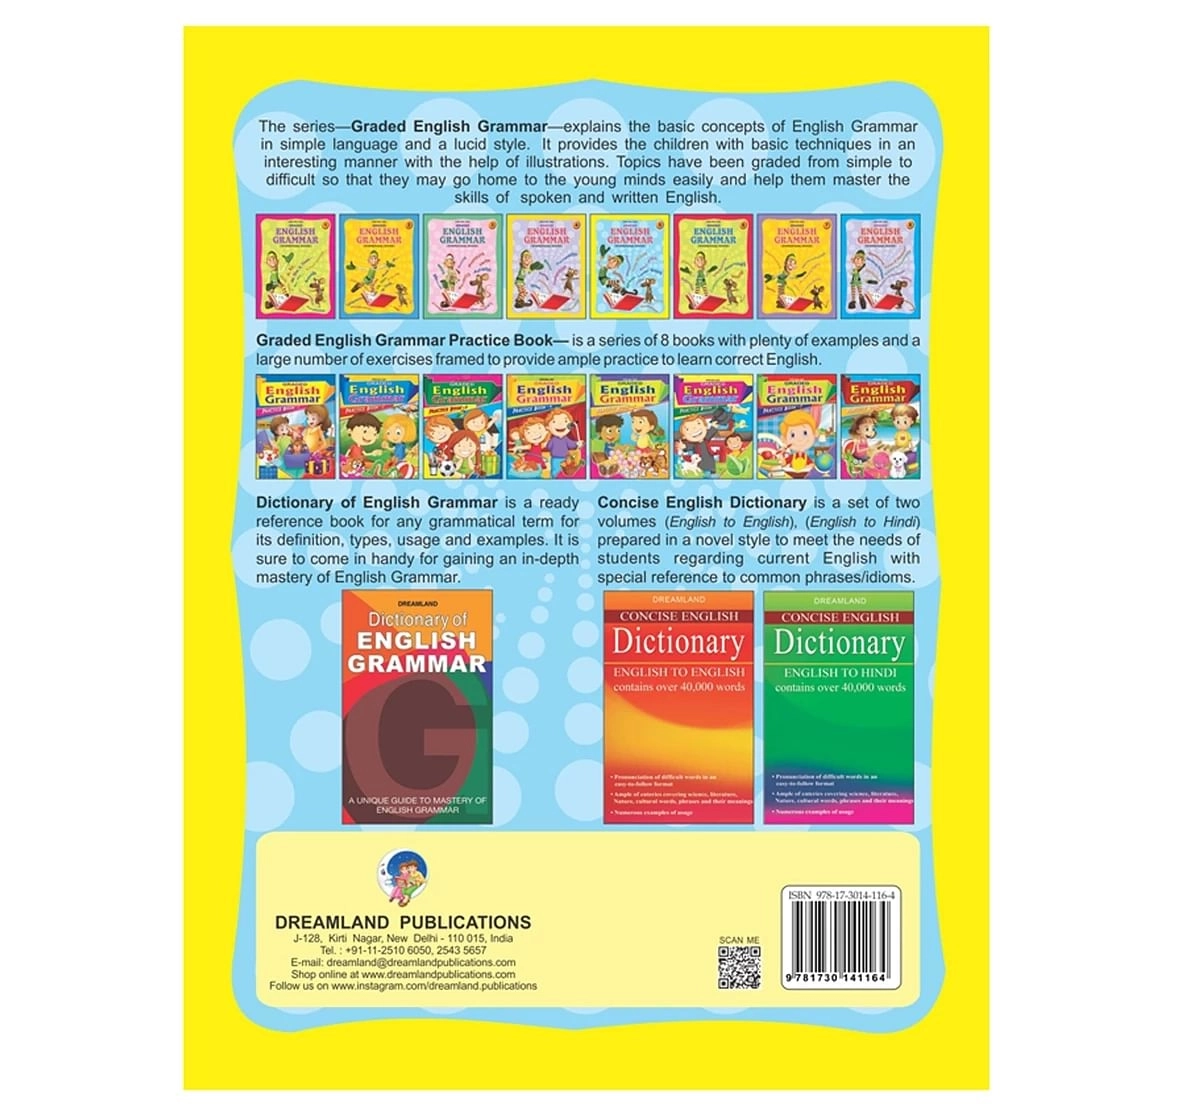 Dreamland Paper Back Graded English Grammar Part 5 School Textbooks for kids 5Y+, Multicolour